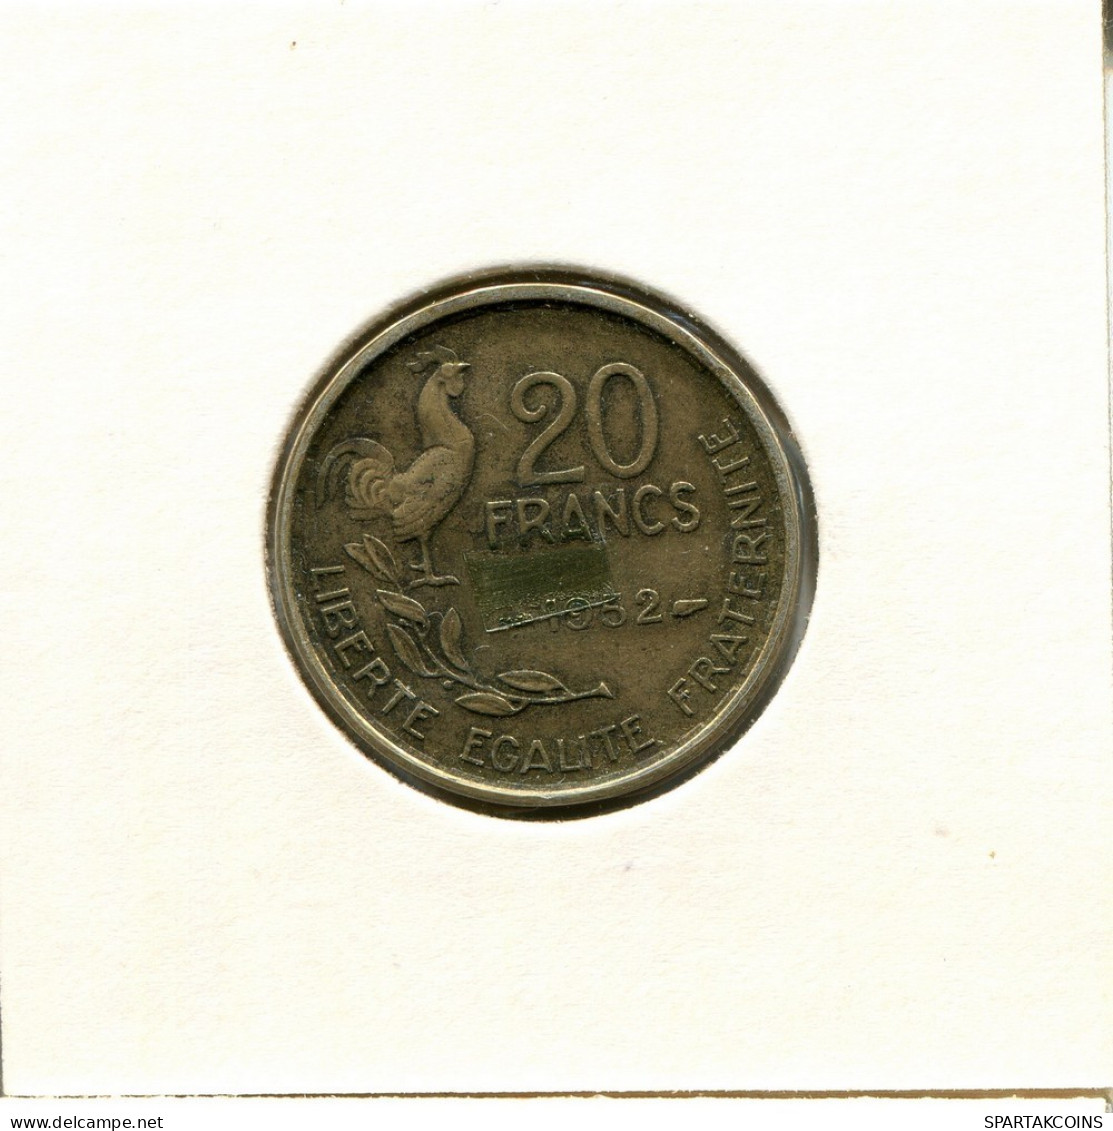 20 FRANCS 1952 FRANKREICH FRANCE Französisch Münze #BB630.D.A - 20 Francs